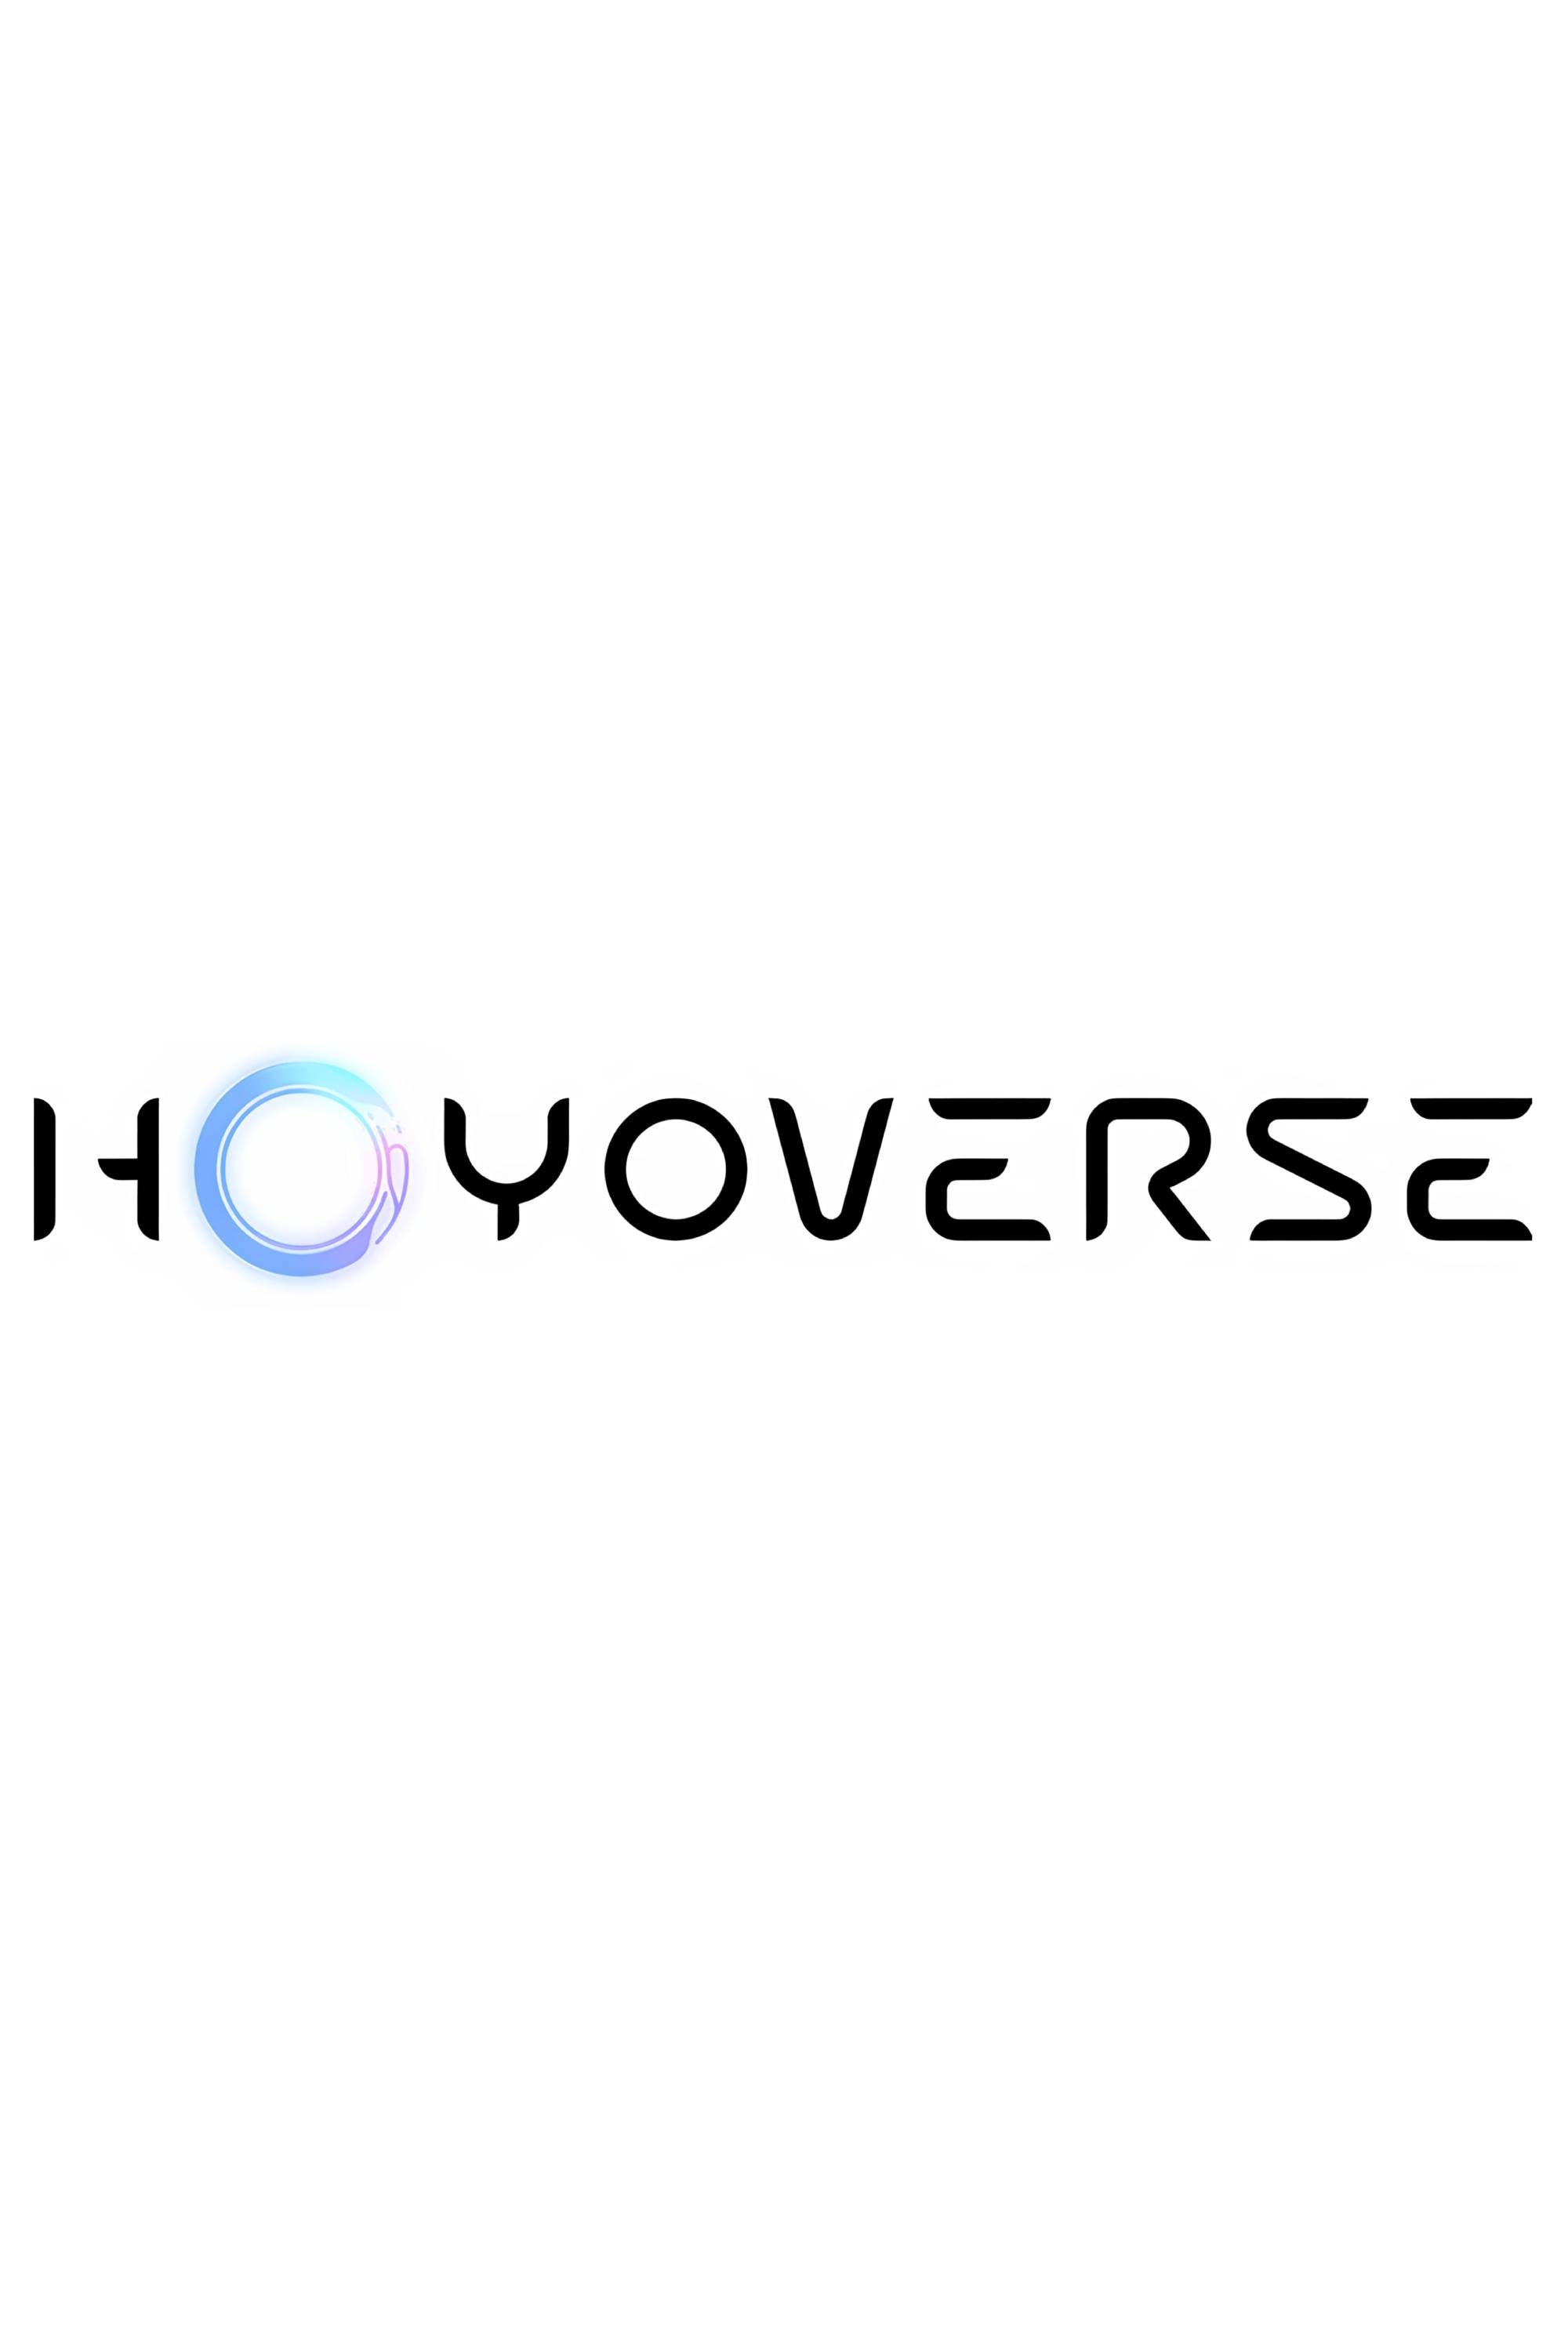 HoYoverse (Formerly miHoYo)